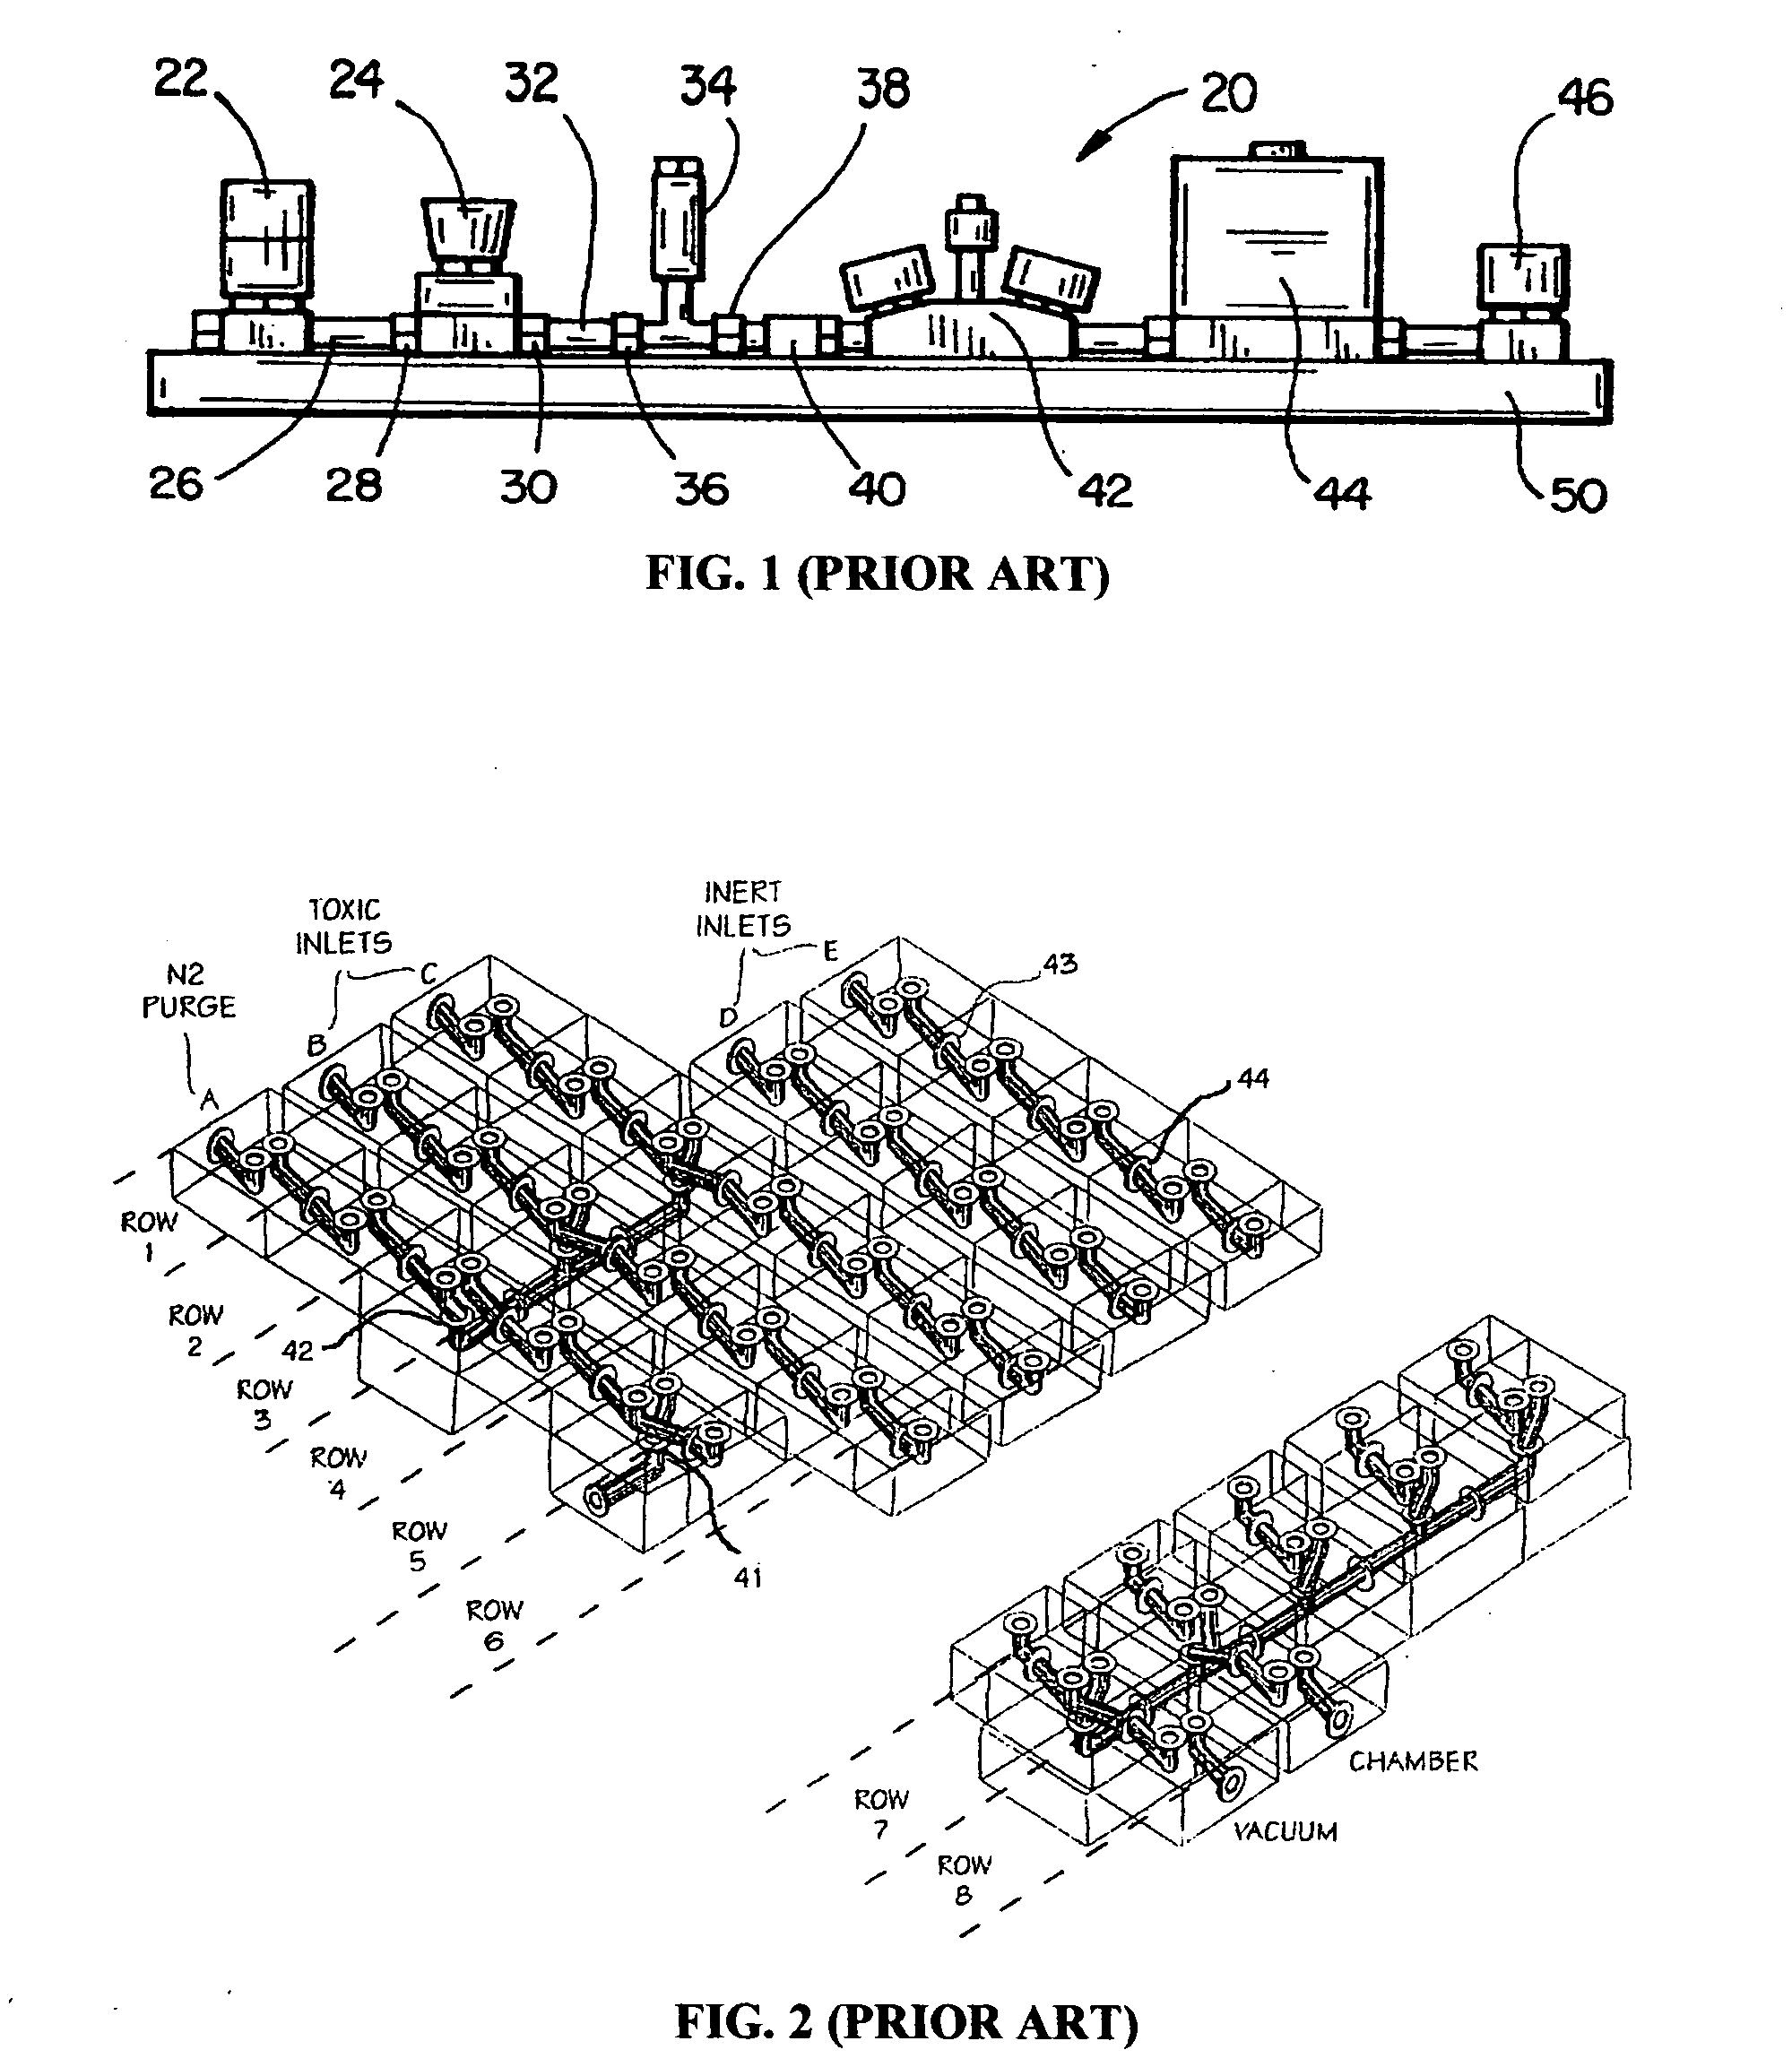 Modular fluid distribution system